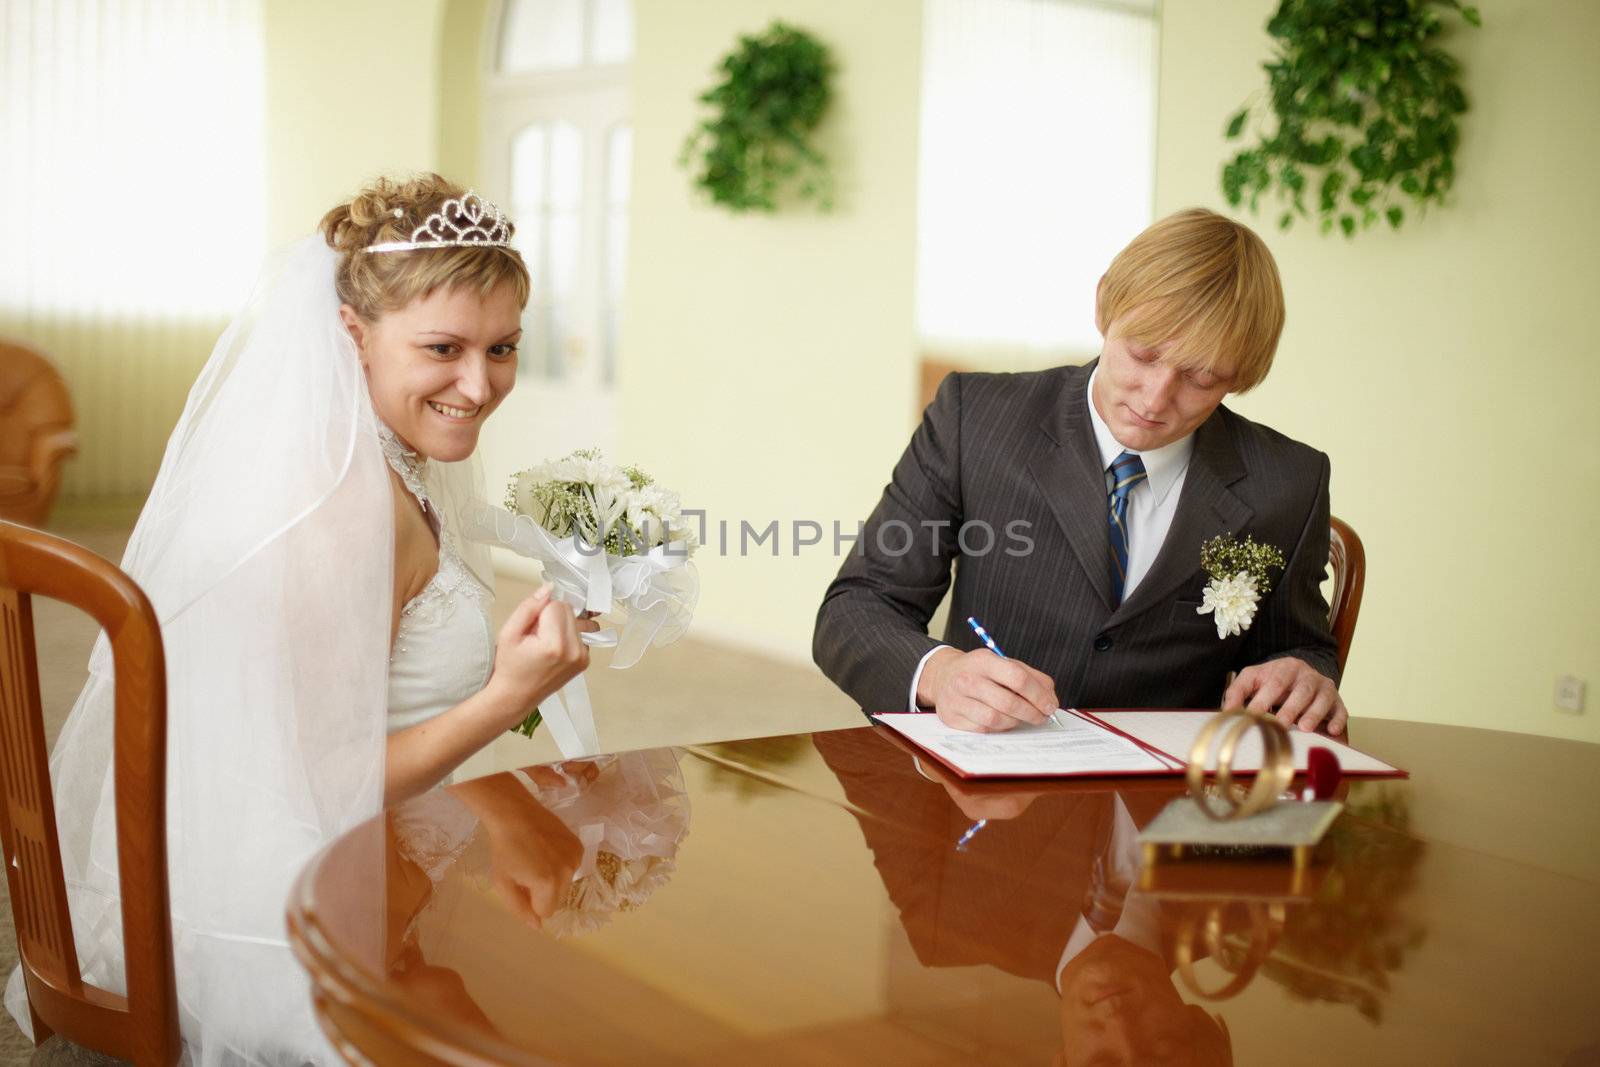 Solemn registration - wedding ceremony by pzaxe